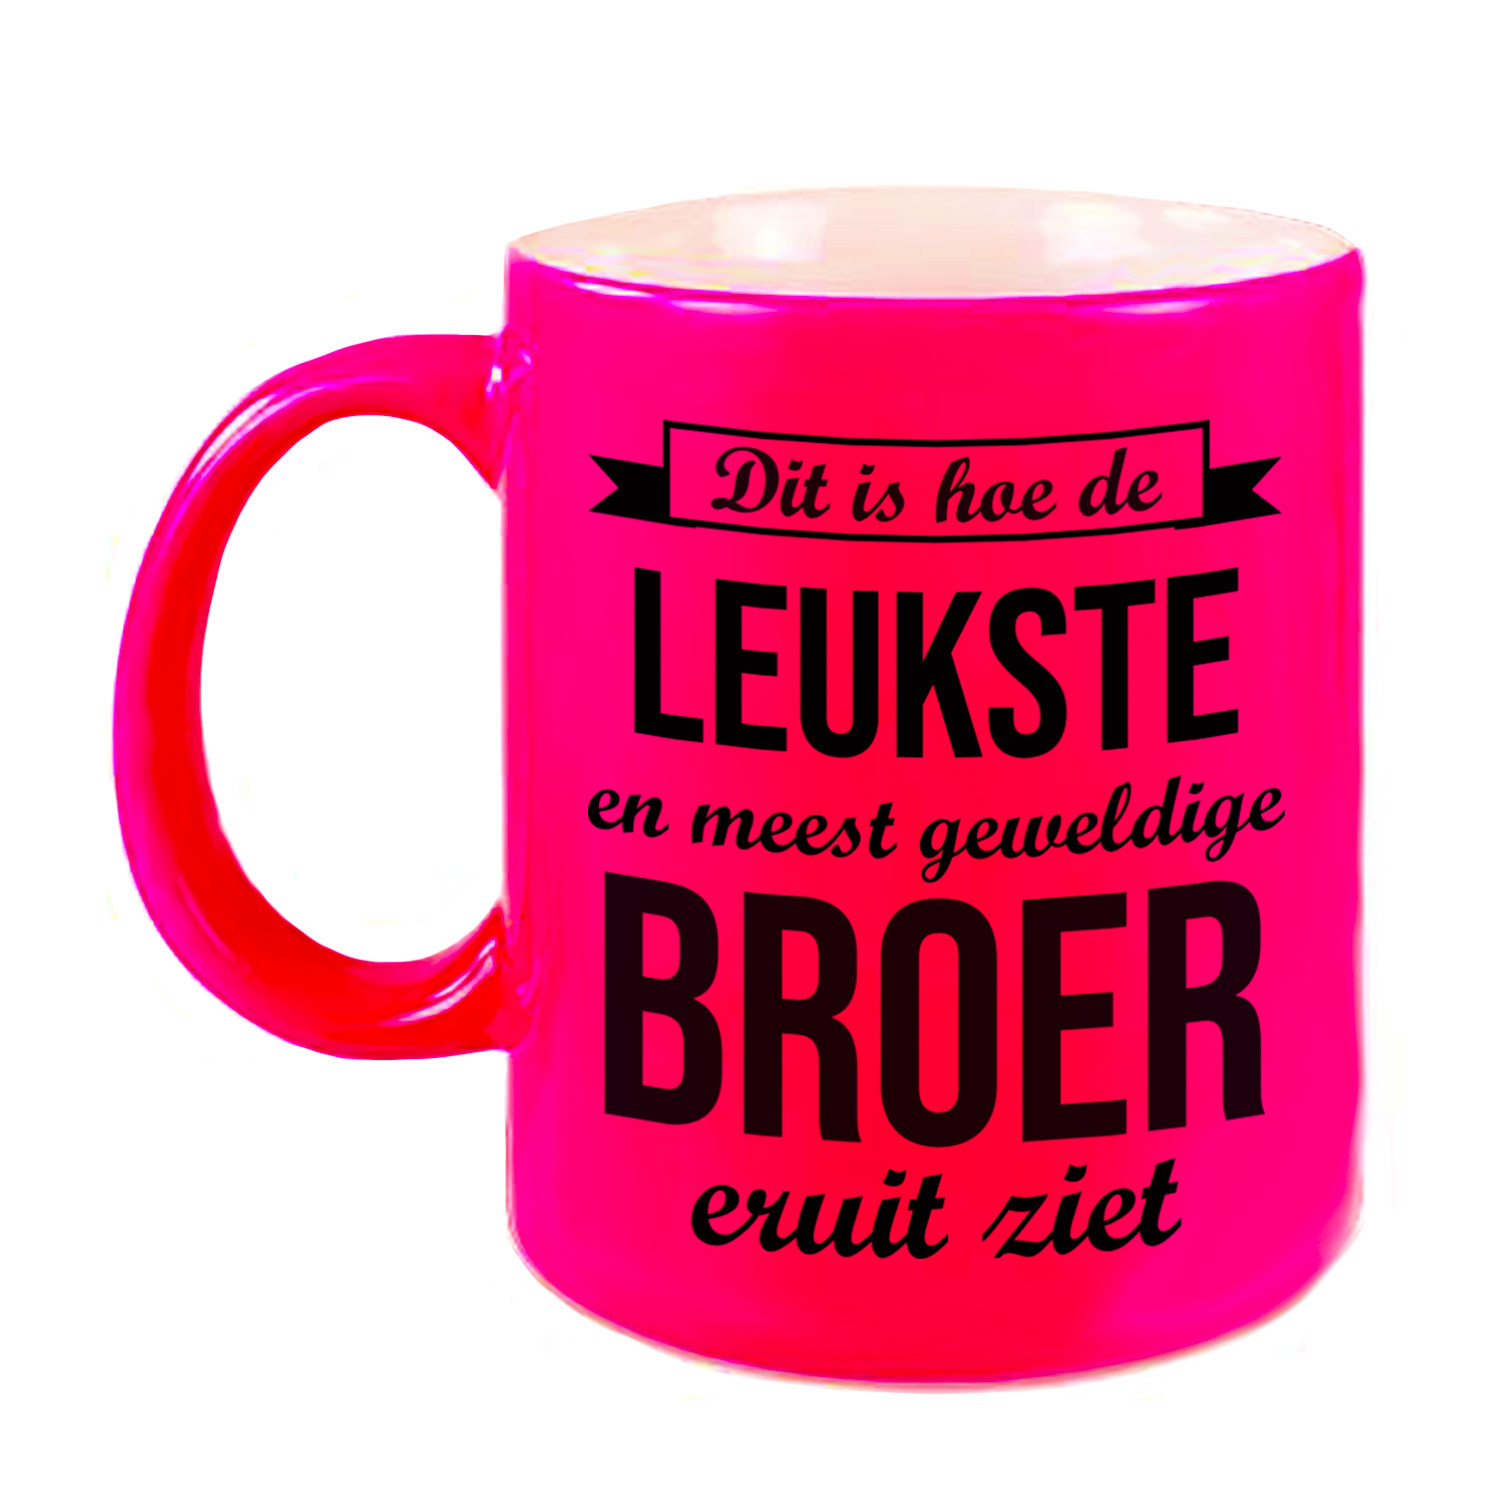 Leukste en meest geweldige broer cadeau koffiemok / theebeker neon roze 330 ml